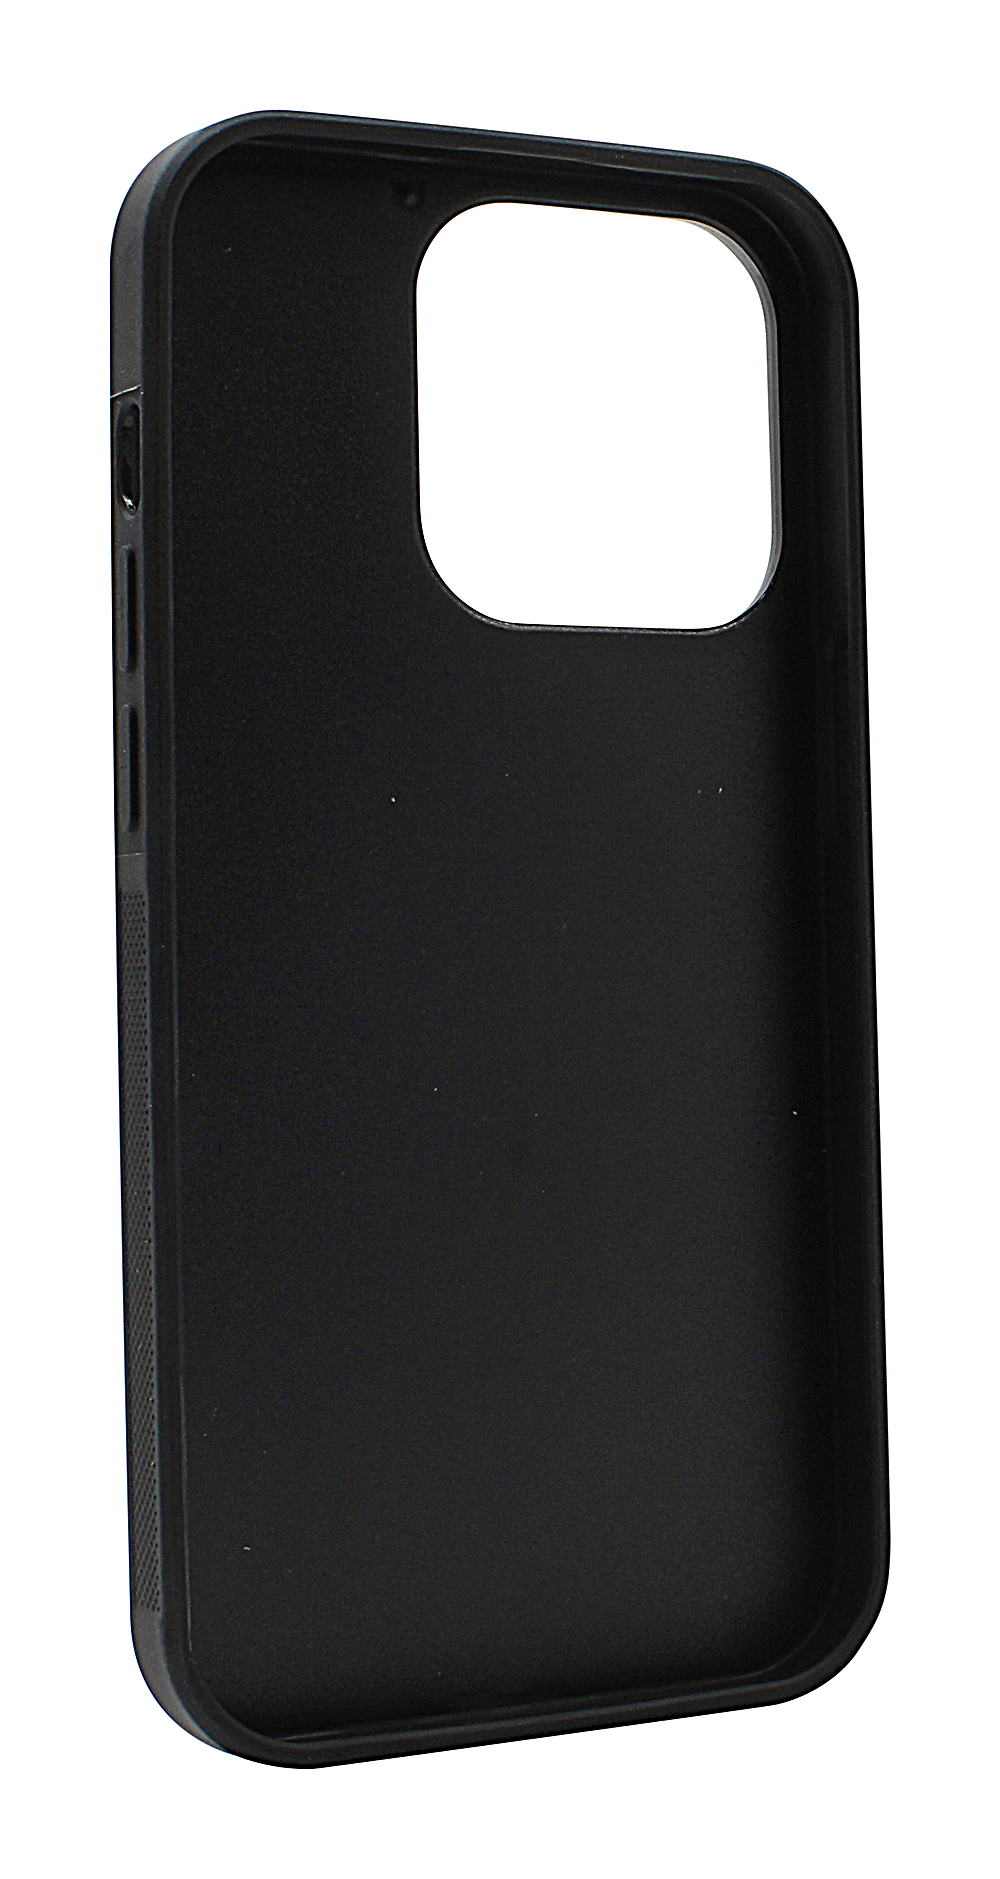 Skimblocker XL Magnet Wallet iPhone 14 Pro (6.1)